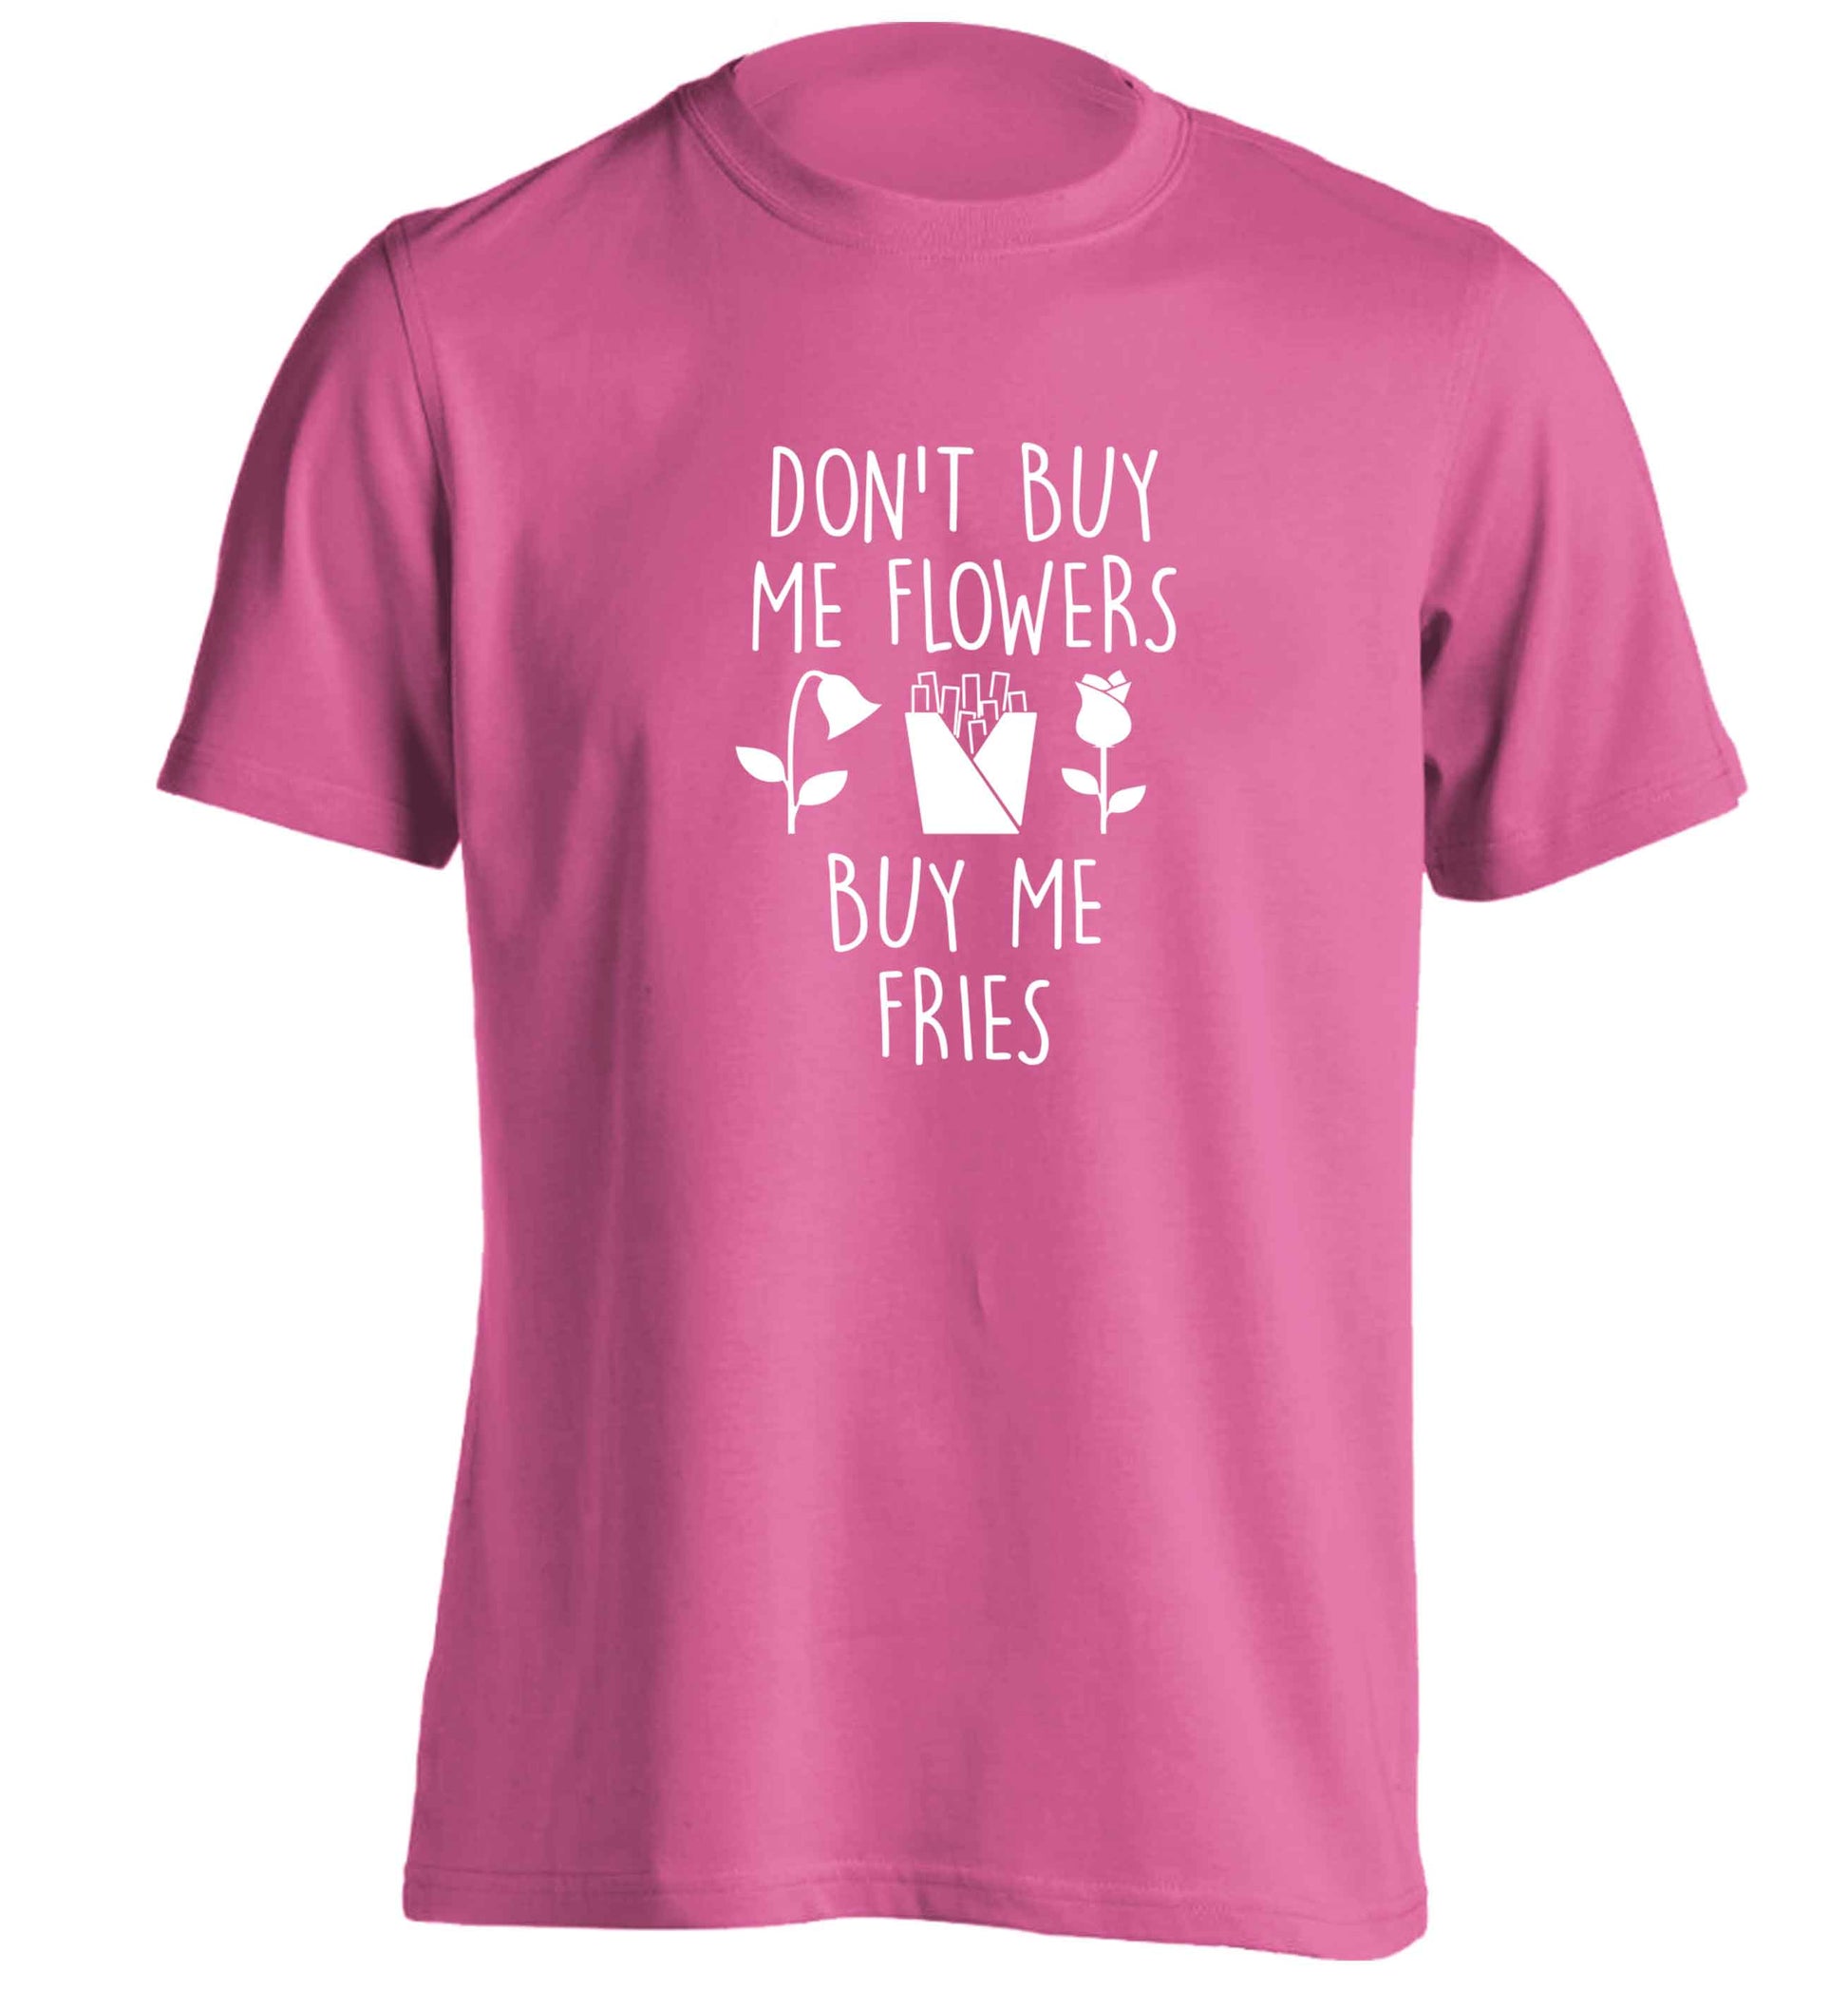 Don't buy me flowers buy me fries adults unisex pink Tshirt 2XL